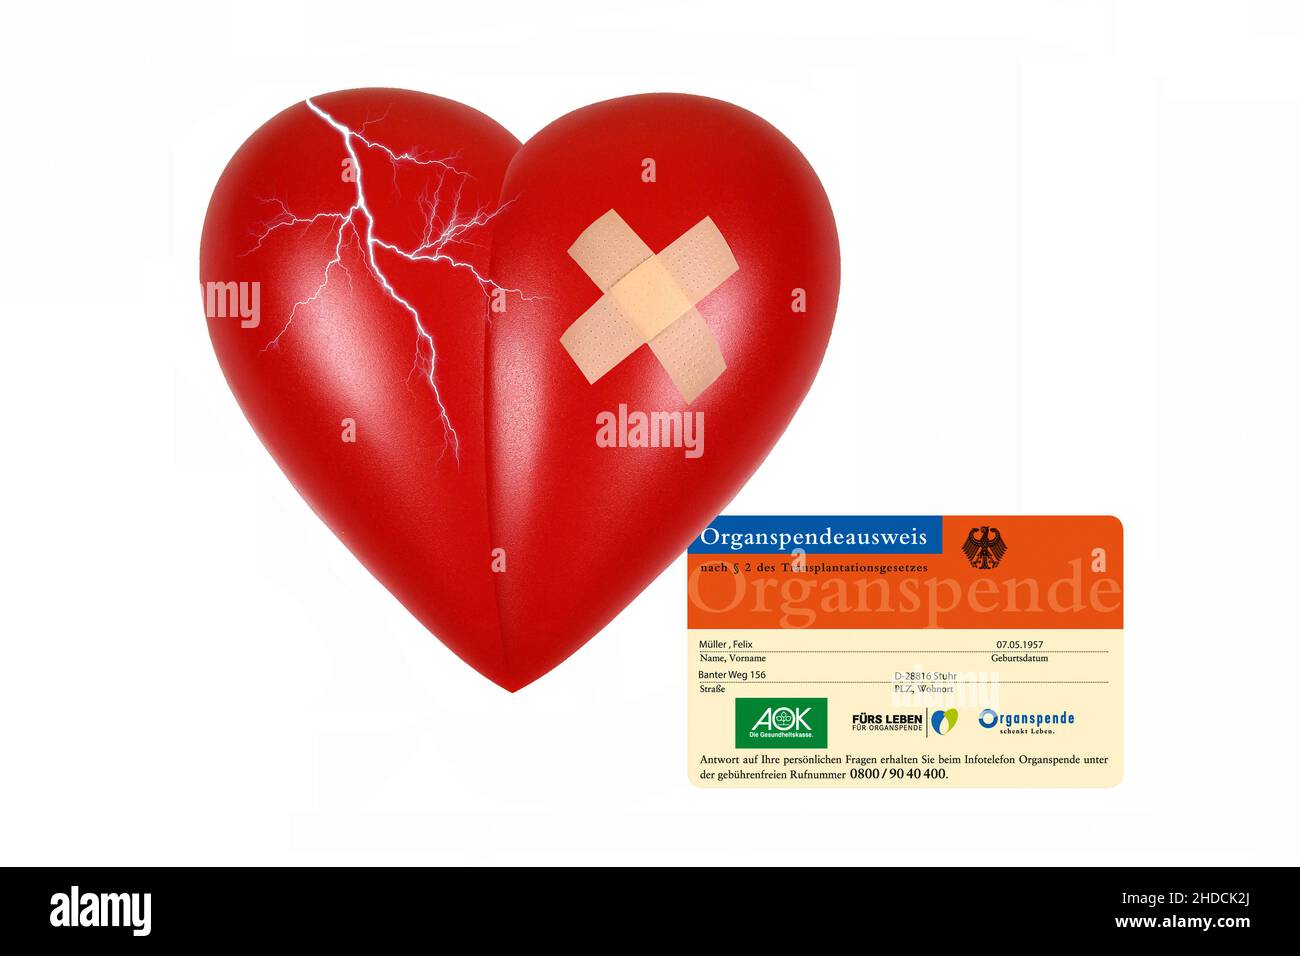 Rotes Herz, Organ, Gesundheit, Körperteil, Pflaster, Organspendeausweis, Operiertes Herz, Operation, Infarkt, Herzinfarkt, Stock Photo